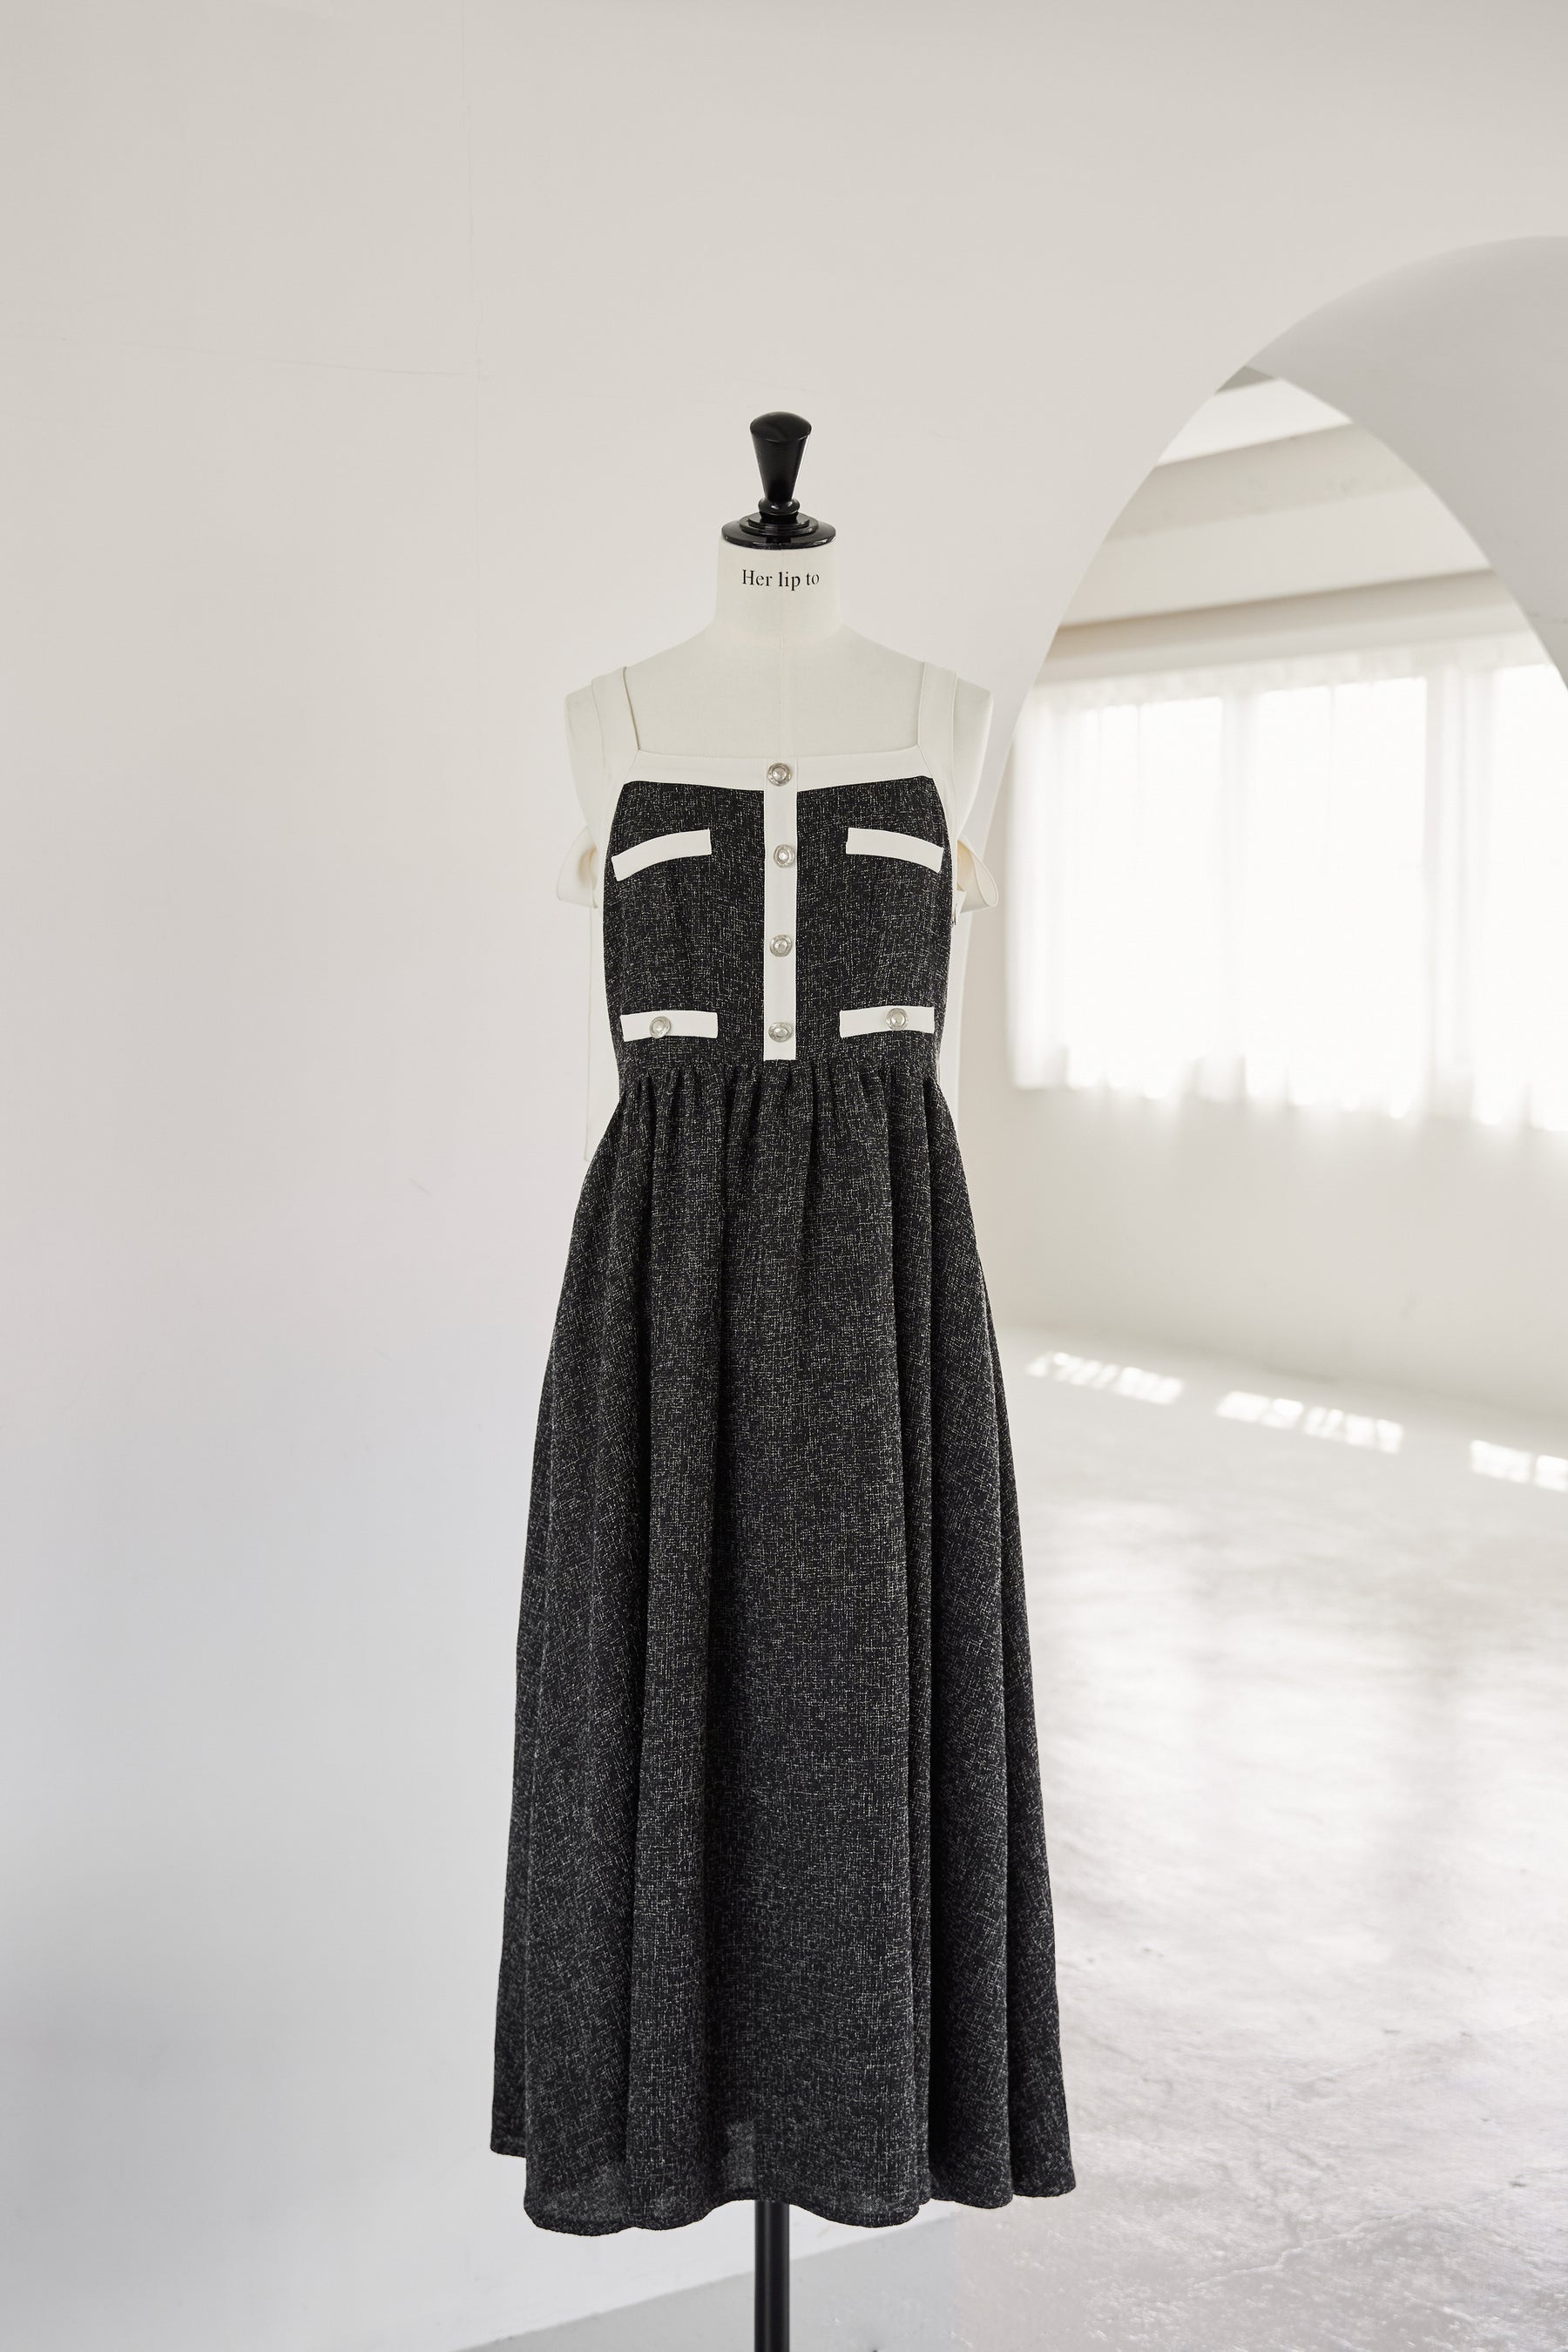 Verona Tweed Long Dress  /her lip to